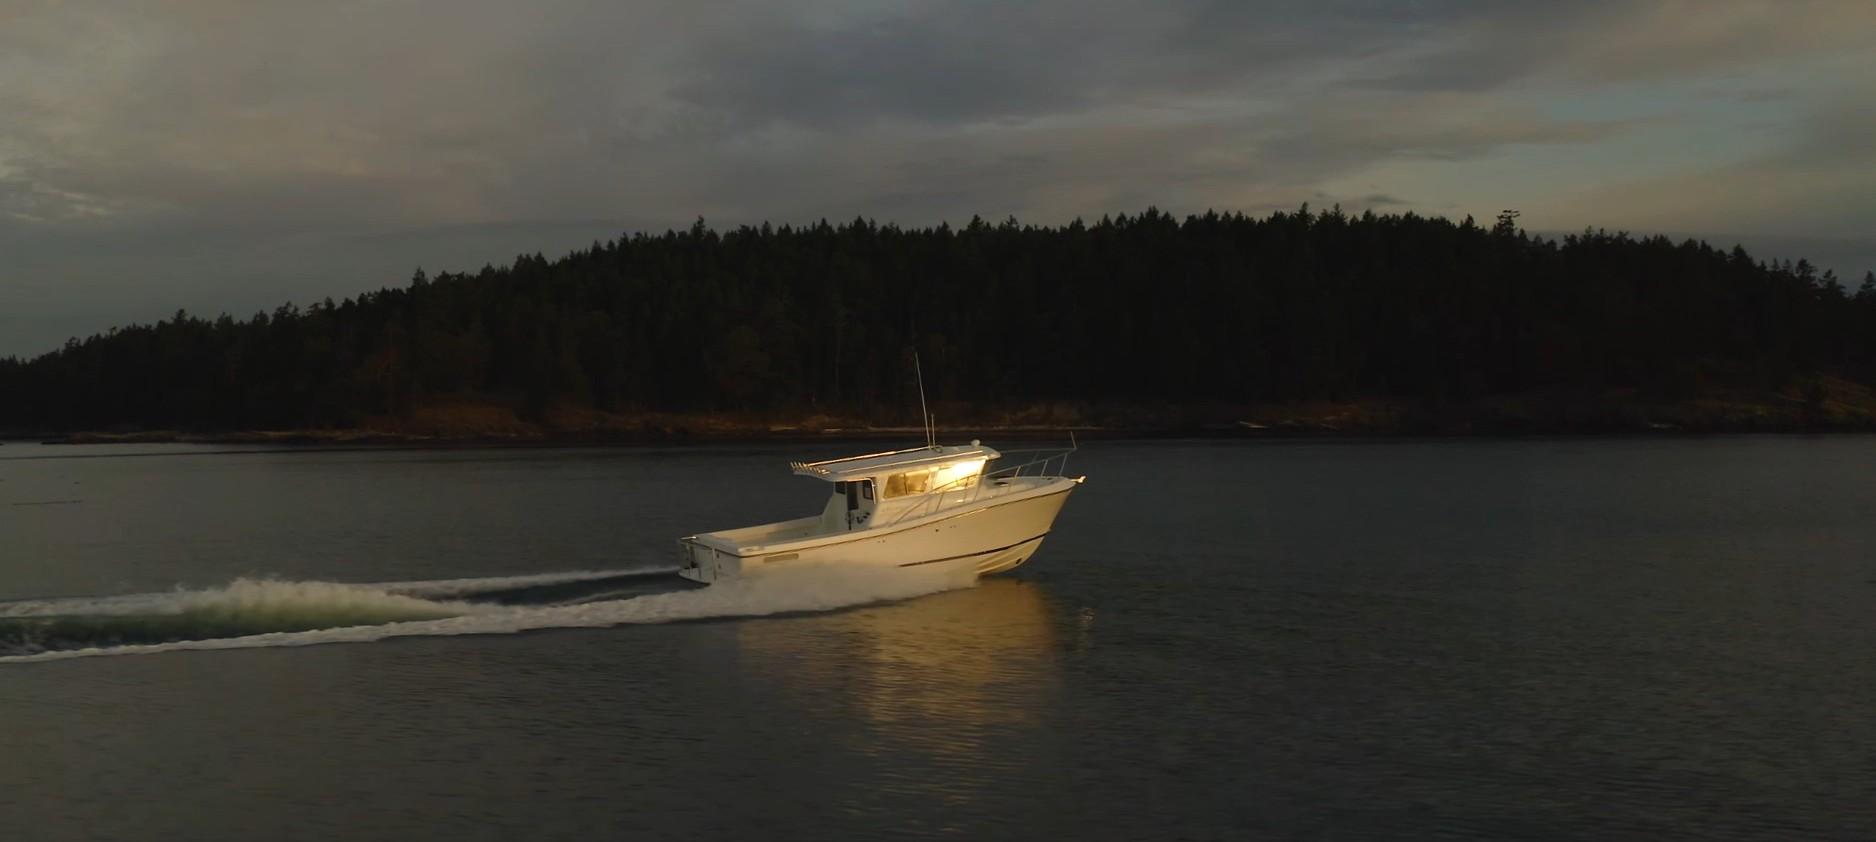 2024 Ocean Sport Roamer 33' hull132 Saltwater Fishing for sale YachtWorld